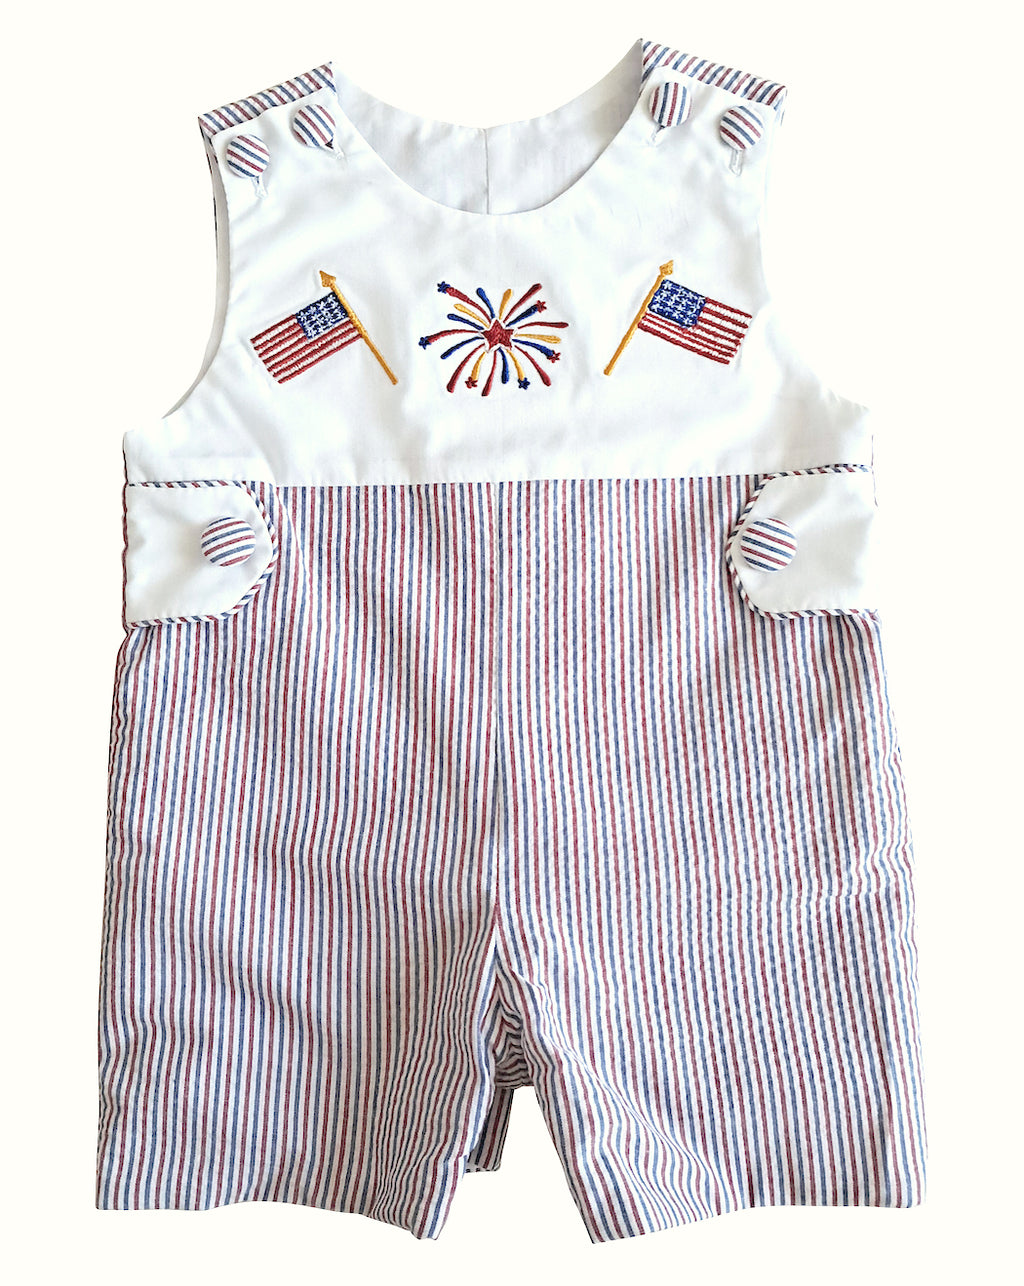 Baby Boy's "Americana Print" Overall